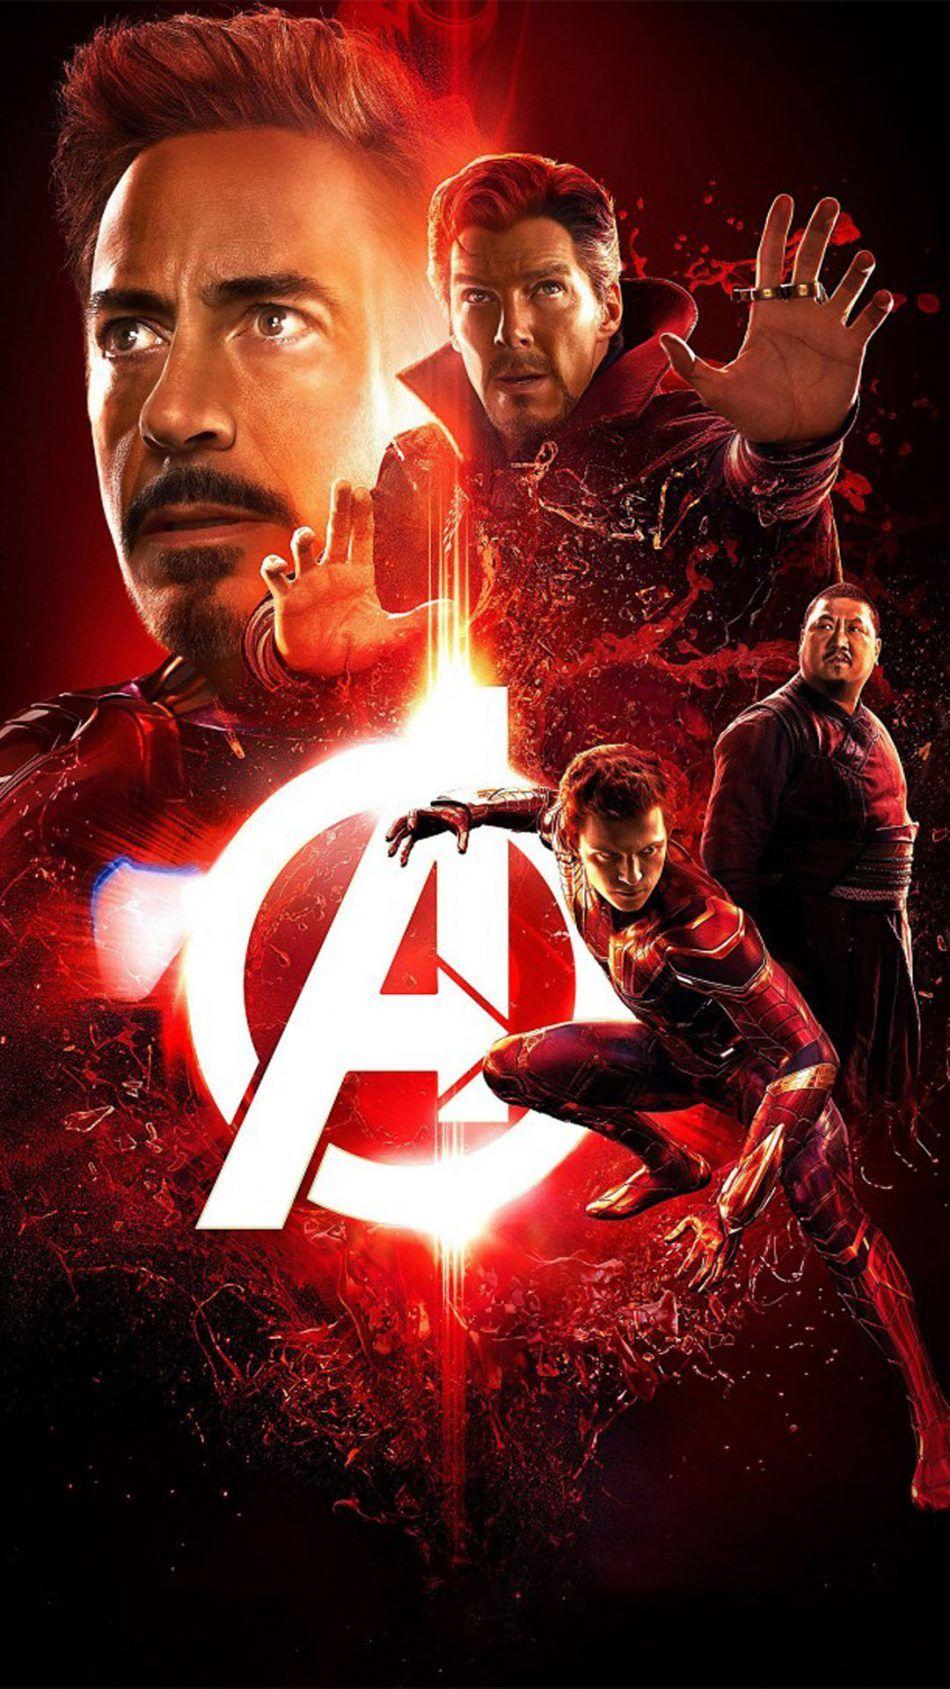 Avengers Infinity War 2018 Free 100% Pure HD Quality